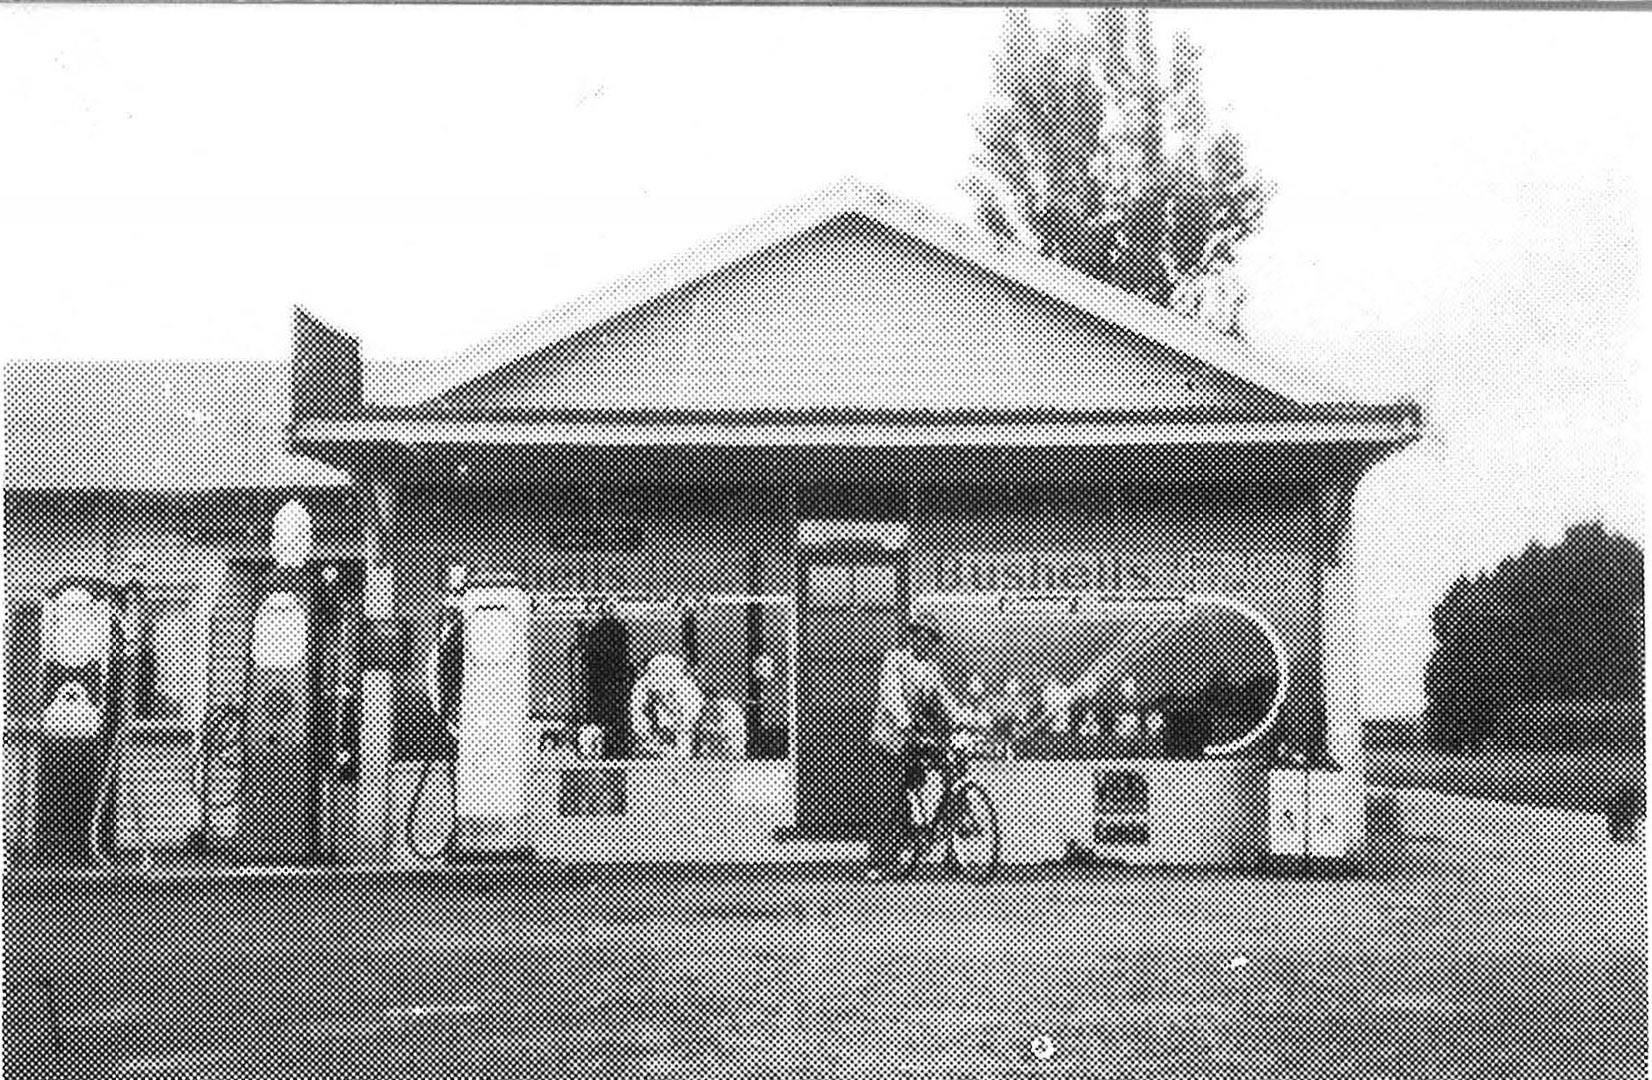 Eureka store with petrol pumps, circa 1960.